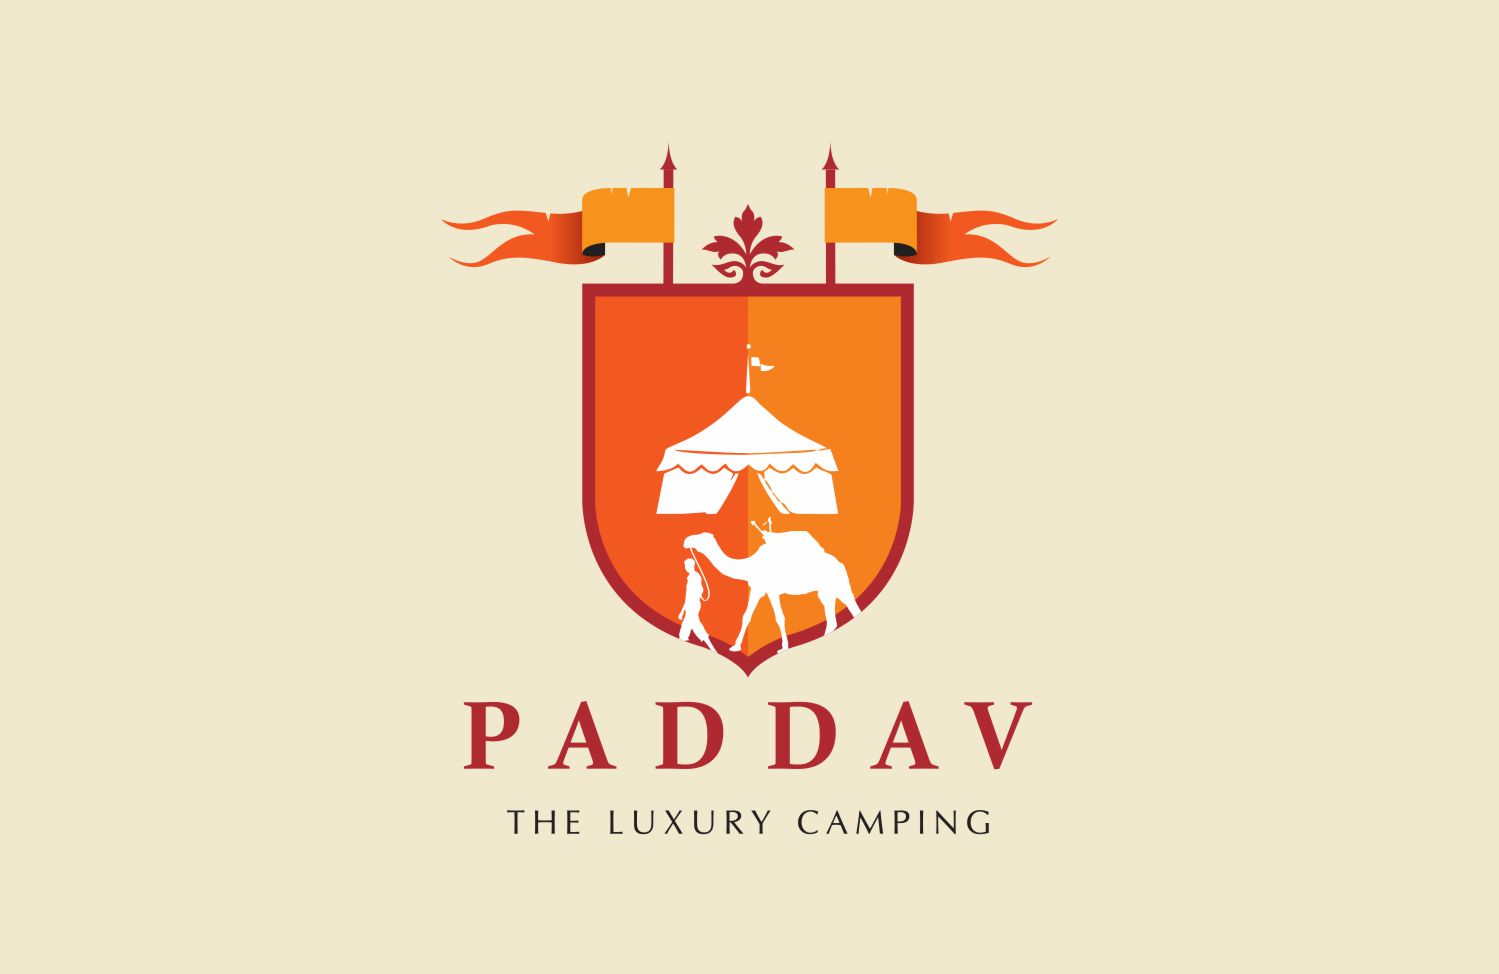 Paddav The Luxury Camping